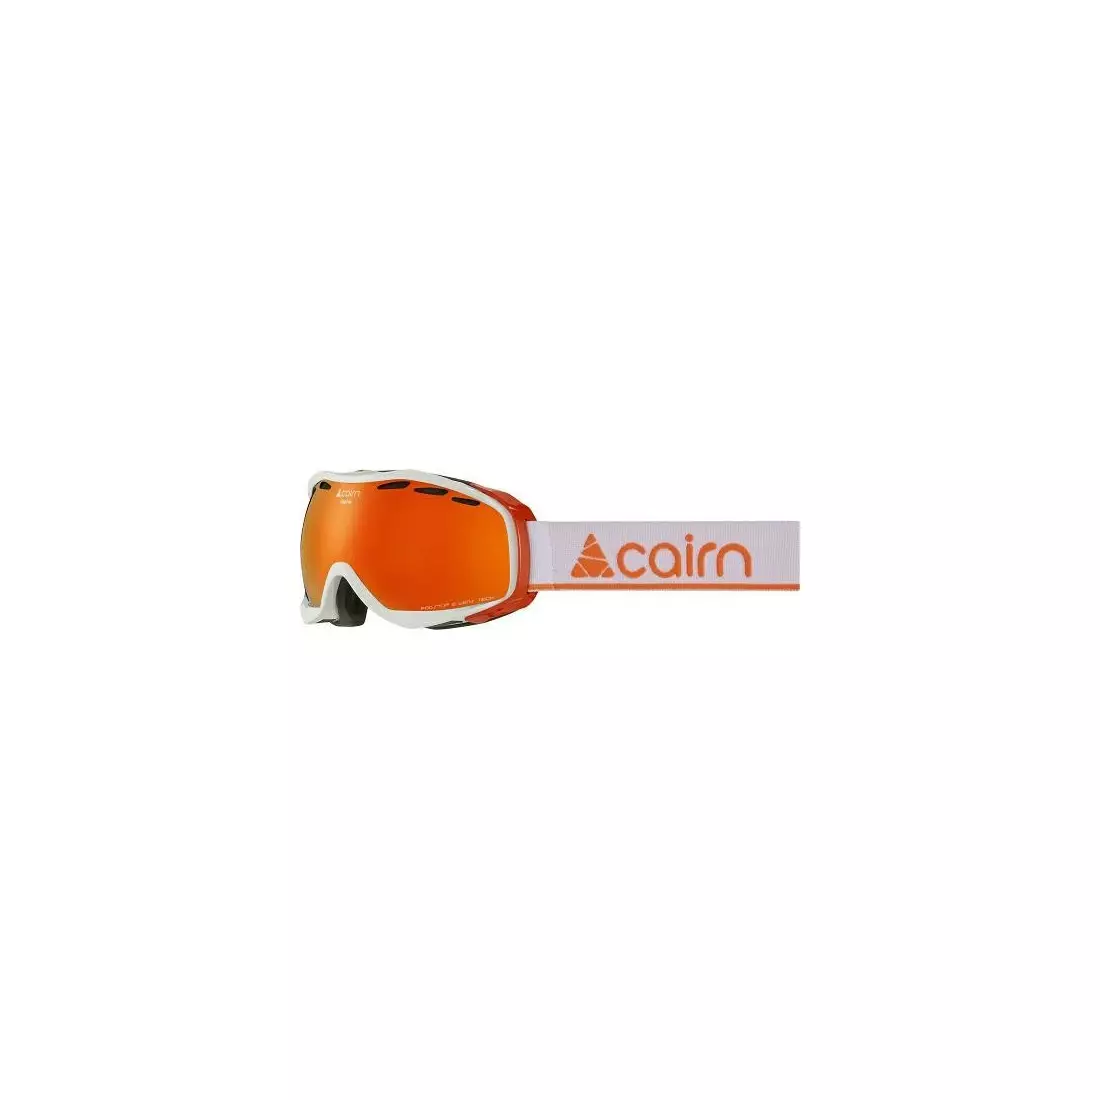 CAIRN lyžařské/snowboardové brýle ALPHA SPX3000 IUM Shiny White Orange